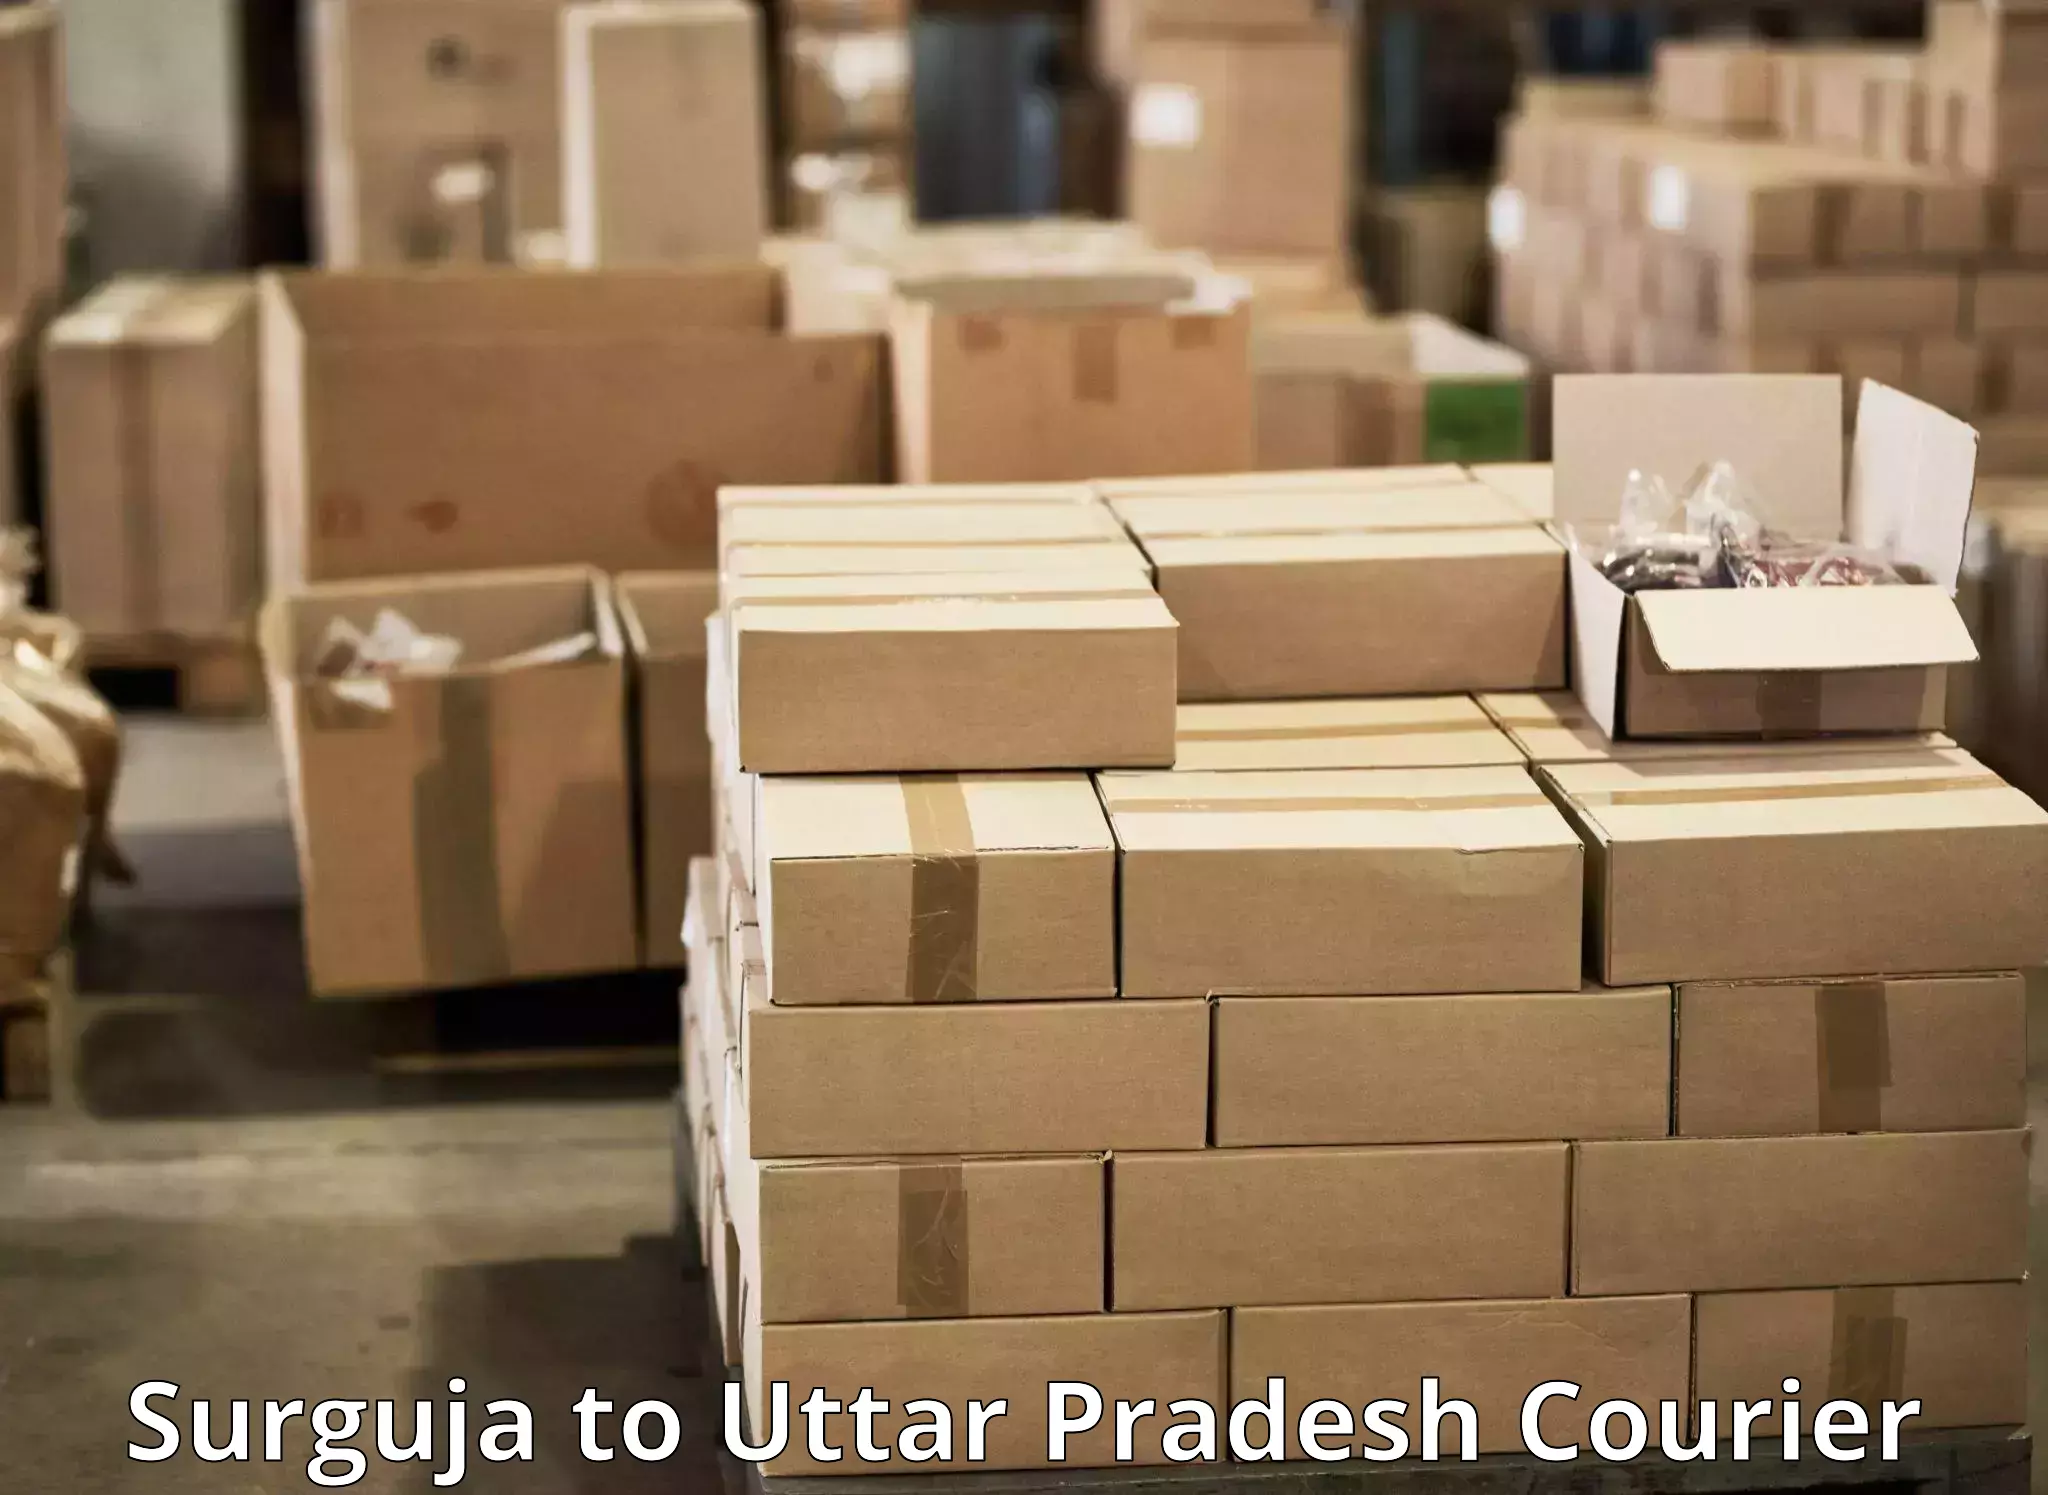 Express logistics providers Surguja to Chandwak